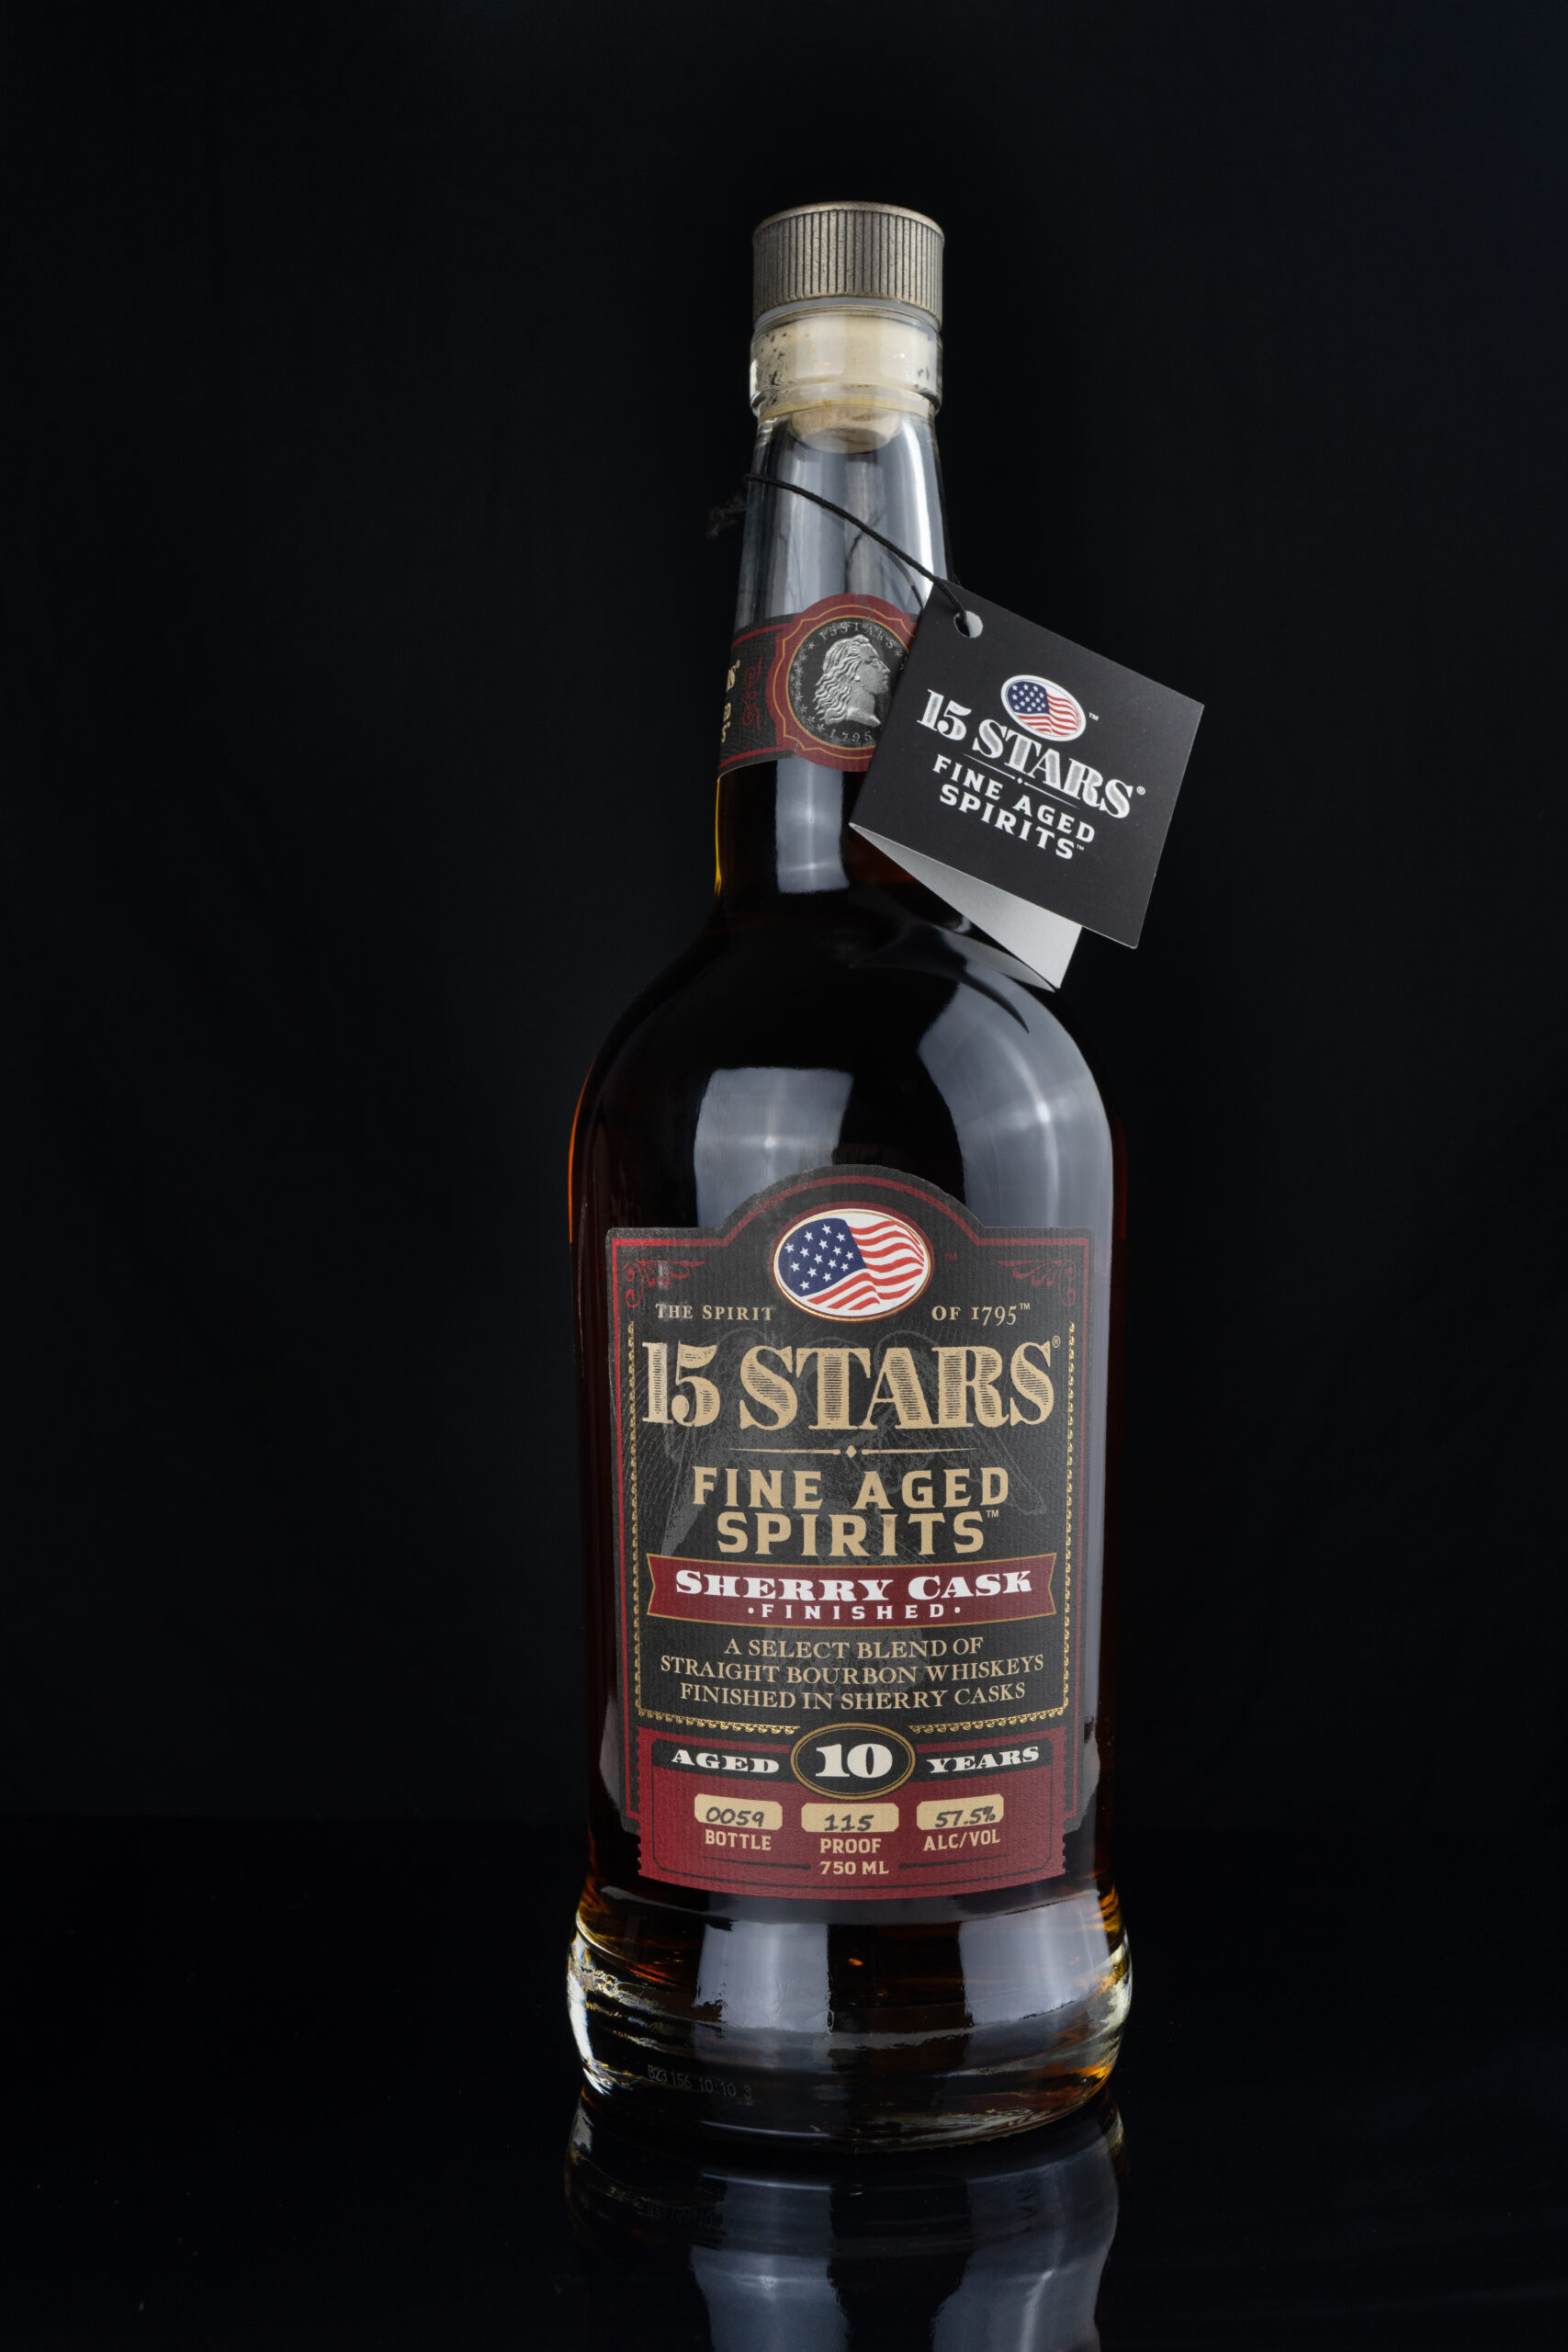 15 STARS Announces New Sherry Cask Finish Bourbon Release